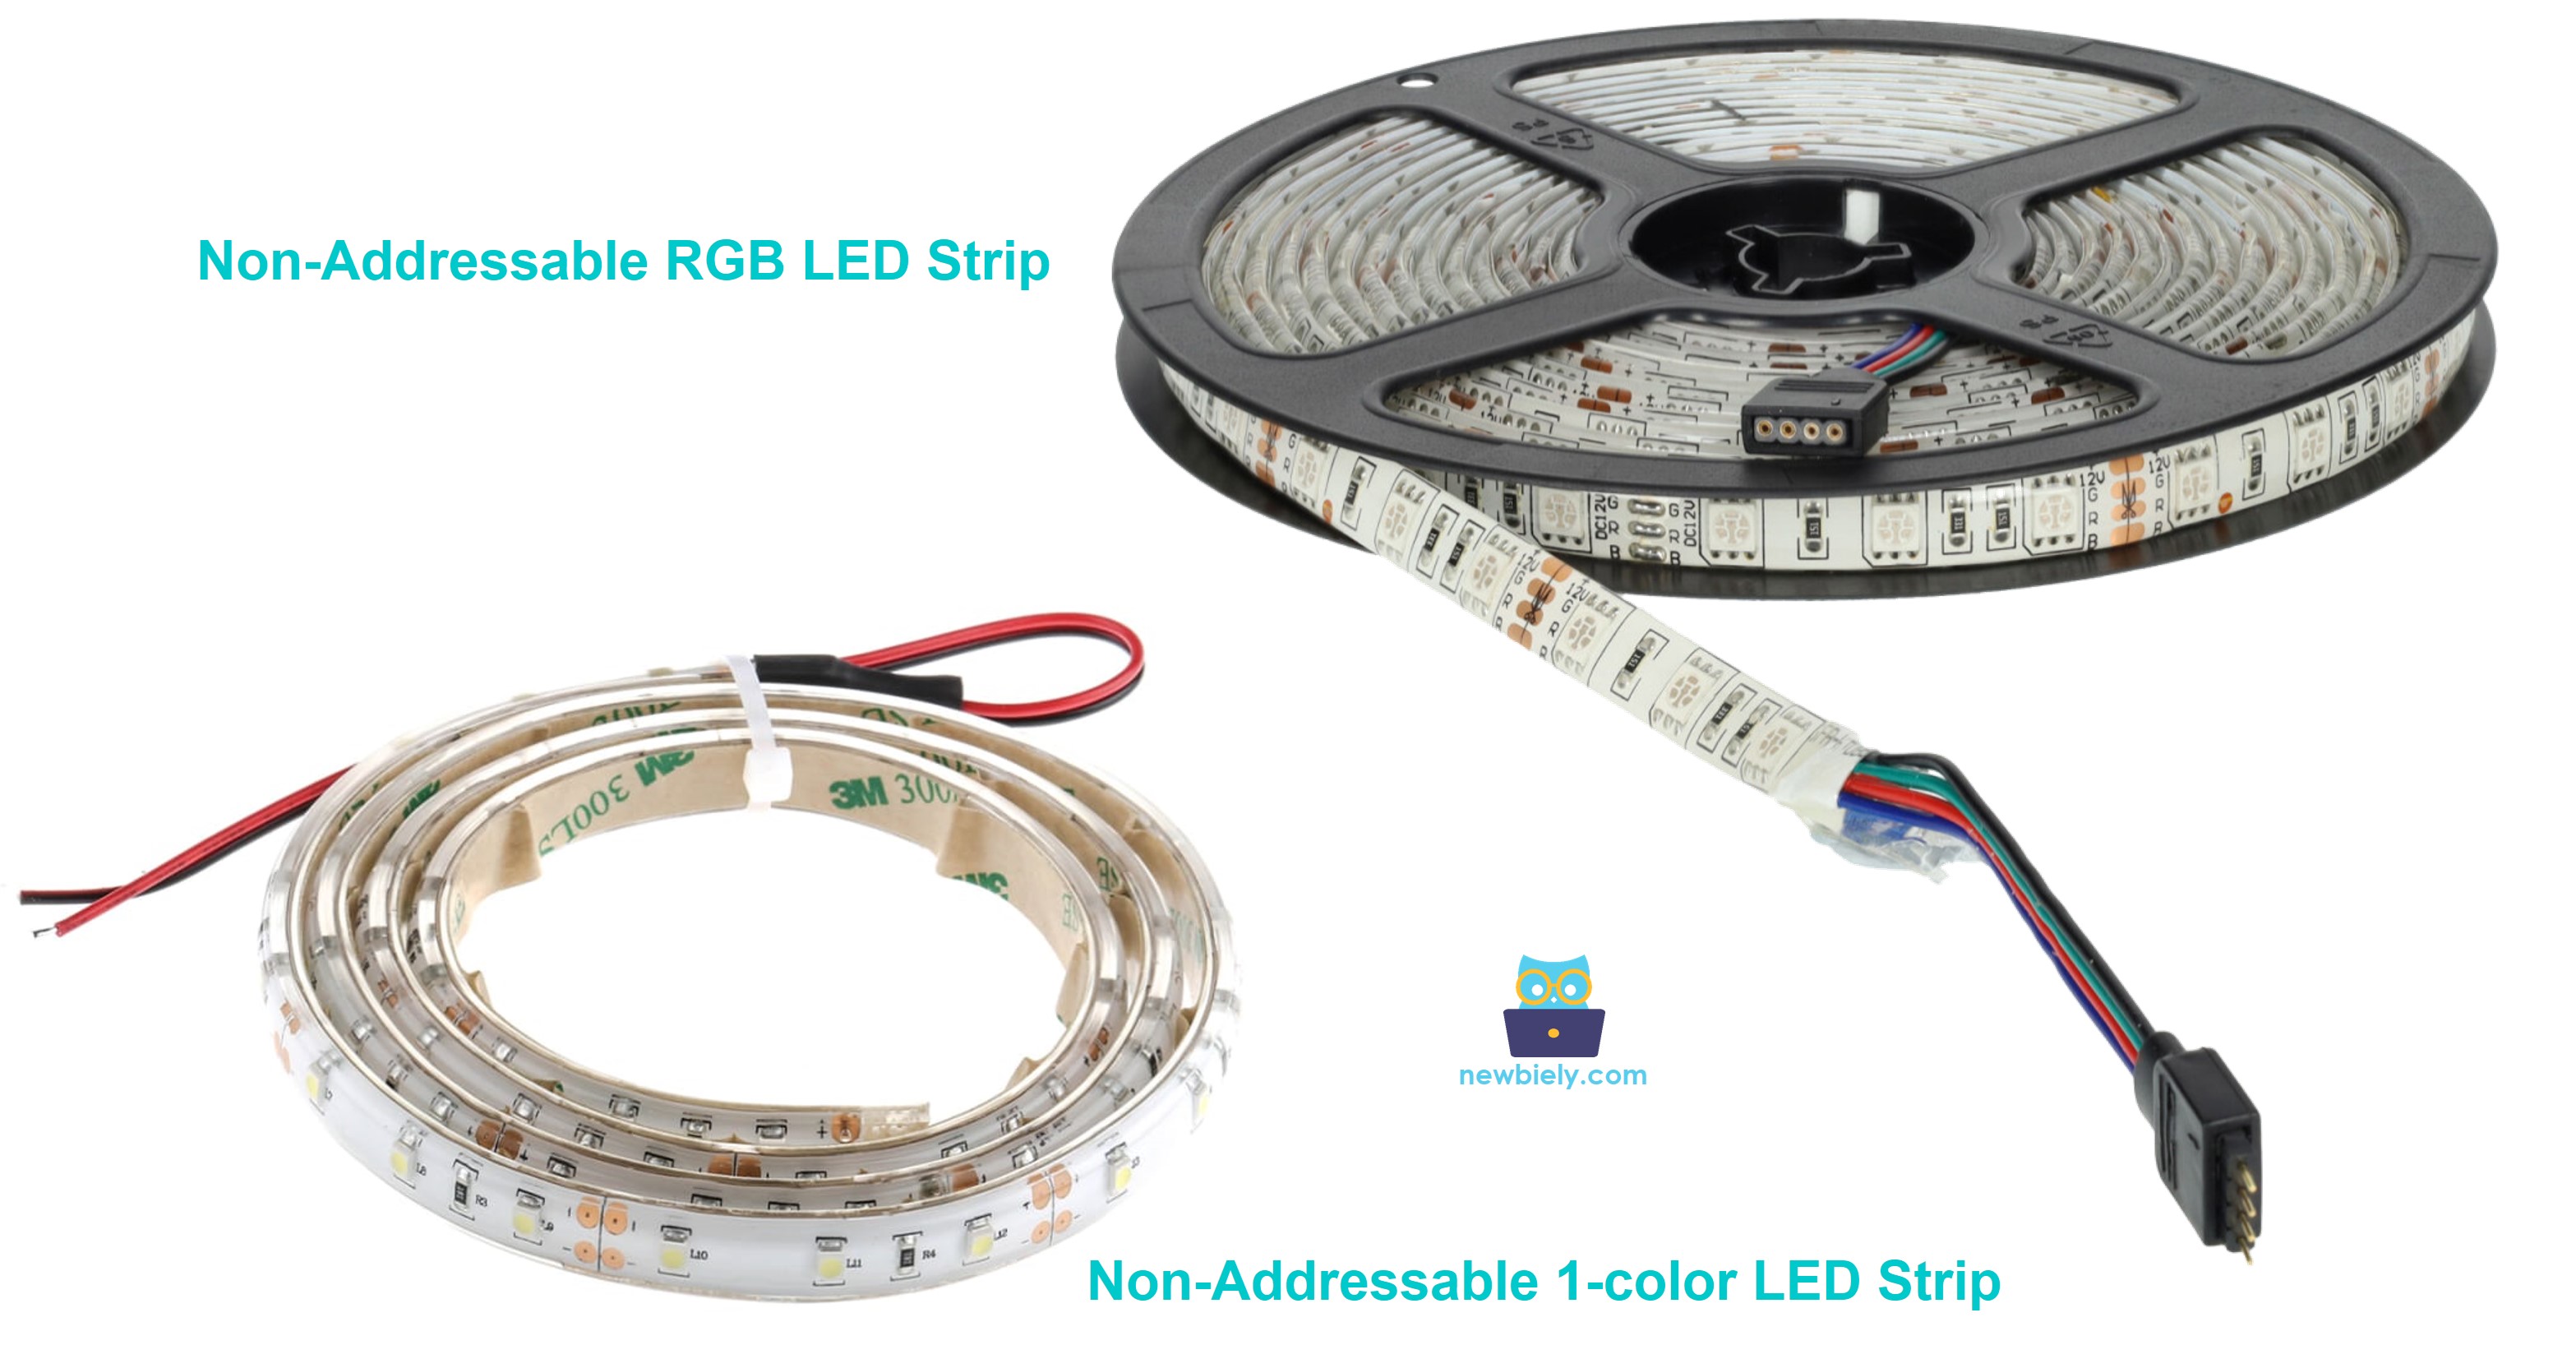 Brochage de la bande de LED non adressable ESP8266 NodeMCU